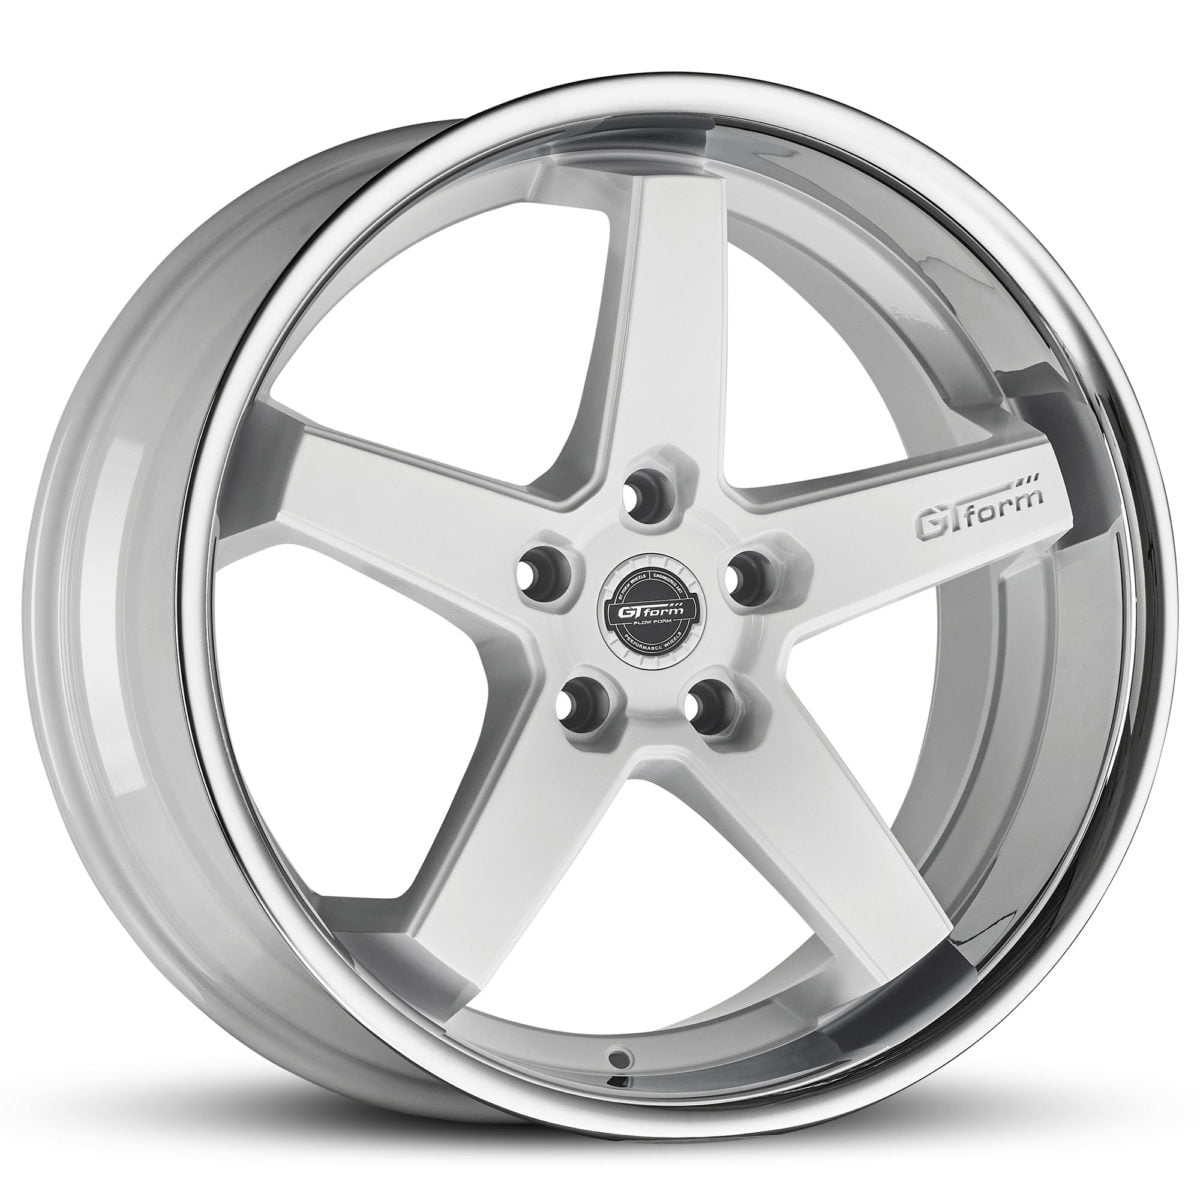 GT Form Legacy gloss white chrome lip wheels car rims performance wheels